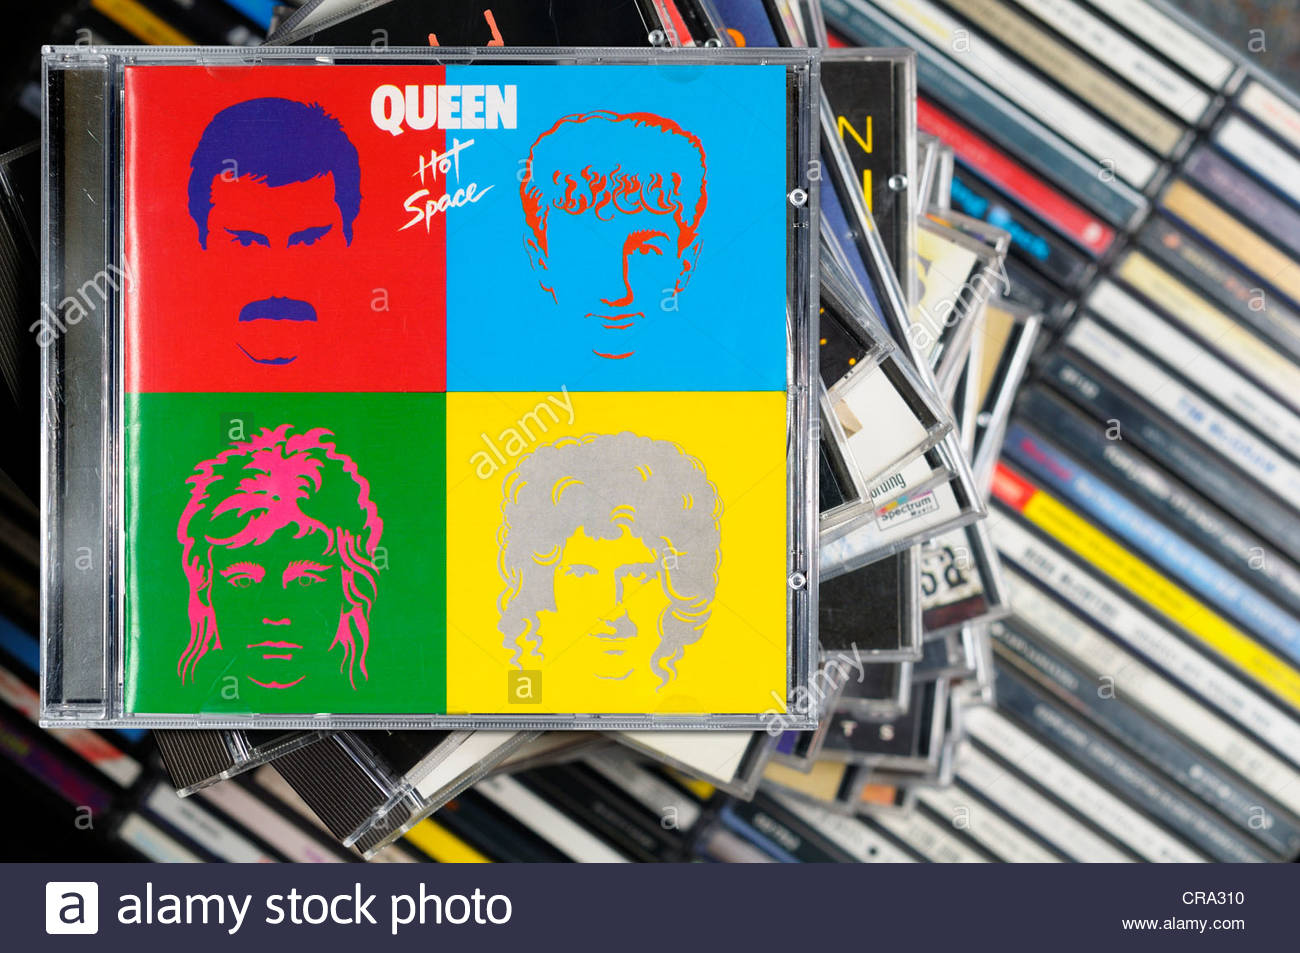 Queen Album Hot Space Cd Cases England Stock Photo 48779724